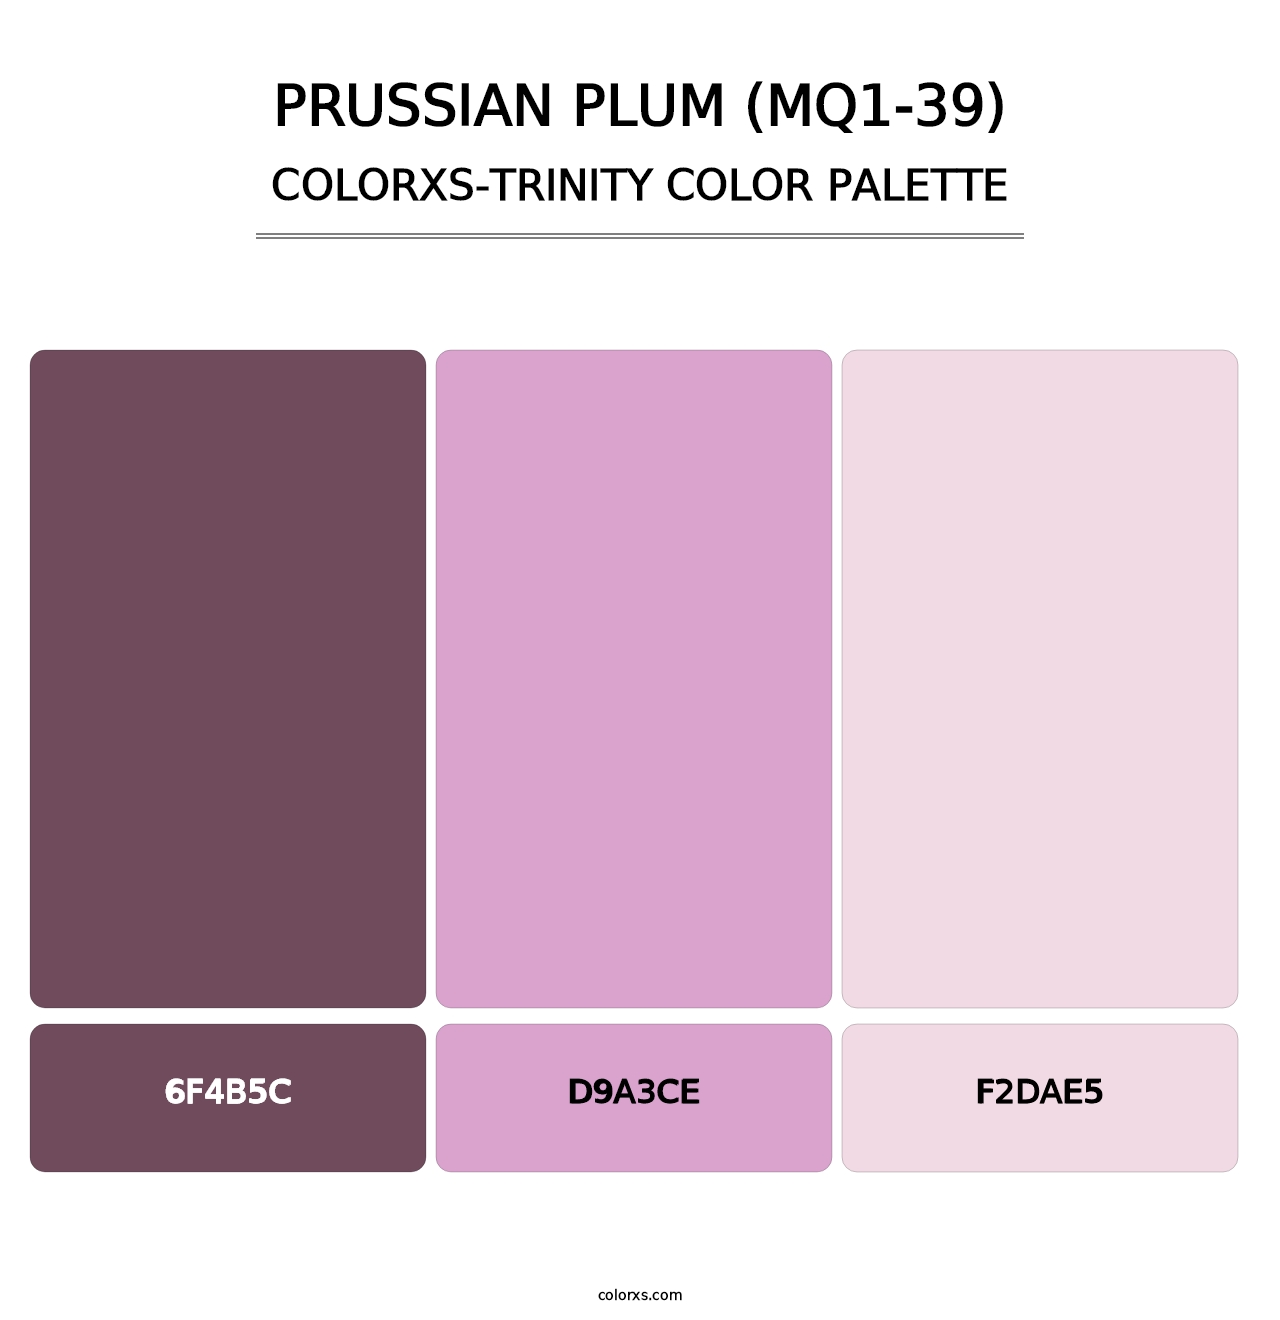 Prussian Plum (MQ1-39) - Colorxs Trinity Palette